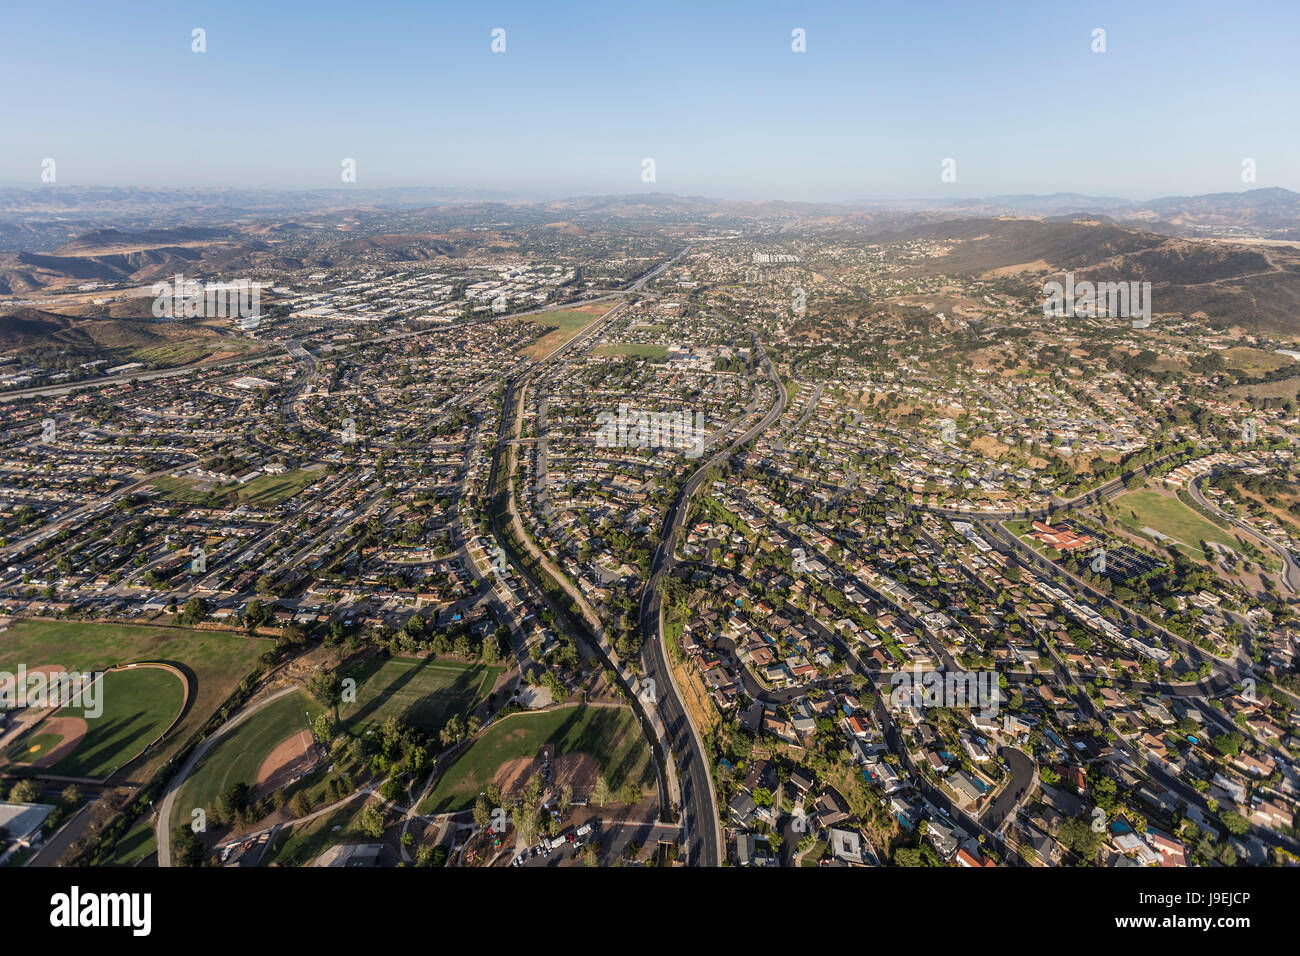 Vista aerea di Newbury Park e Thousand Oaks vicino a Los Angeles, California. Foto Stock